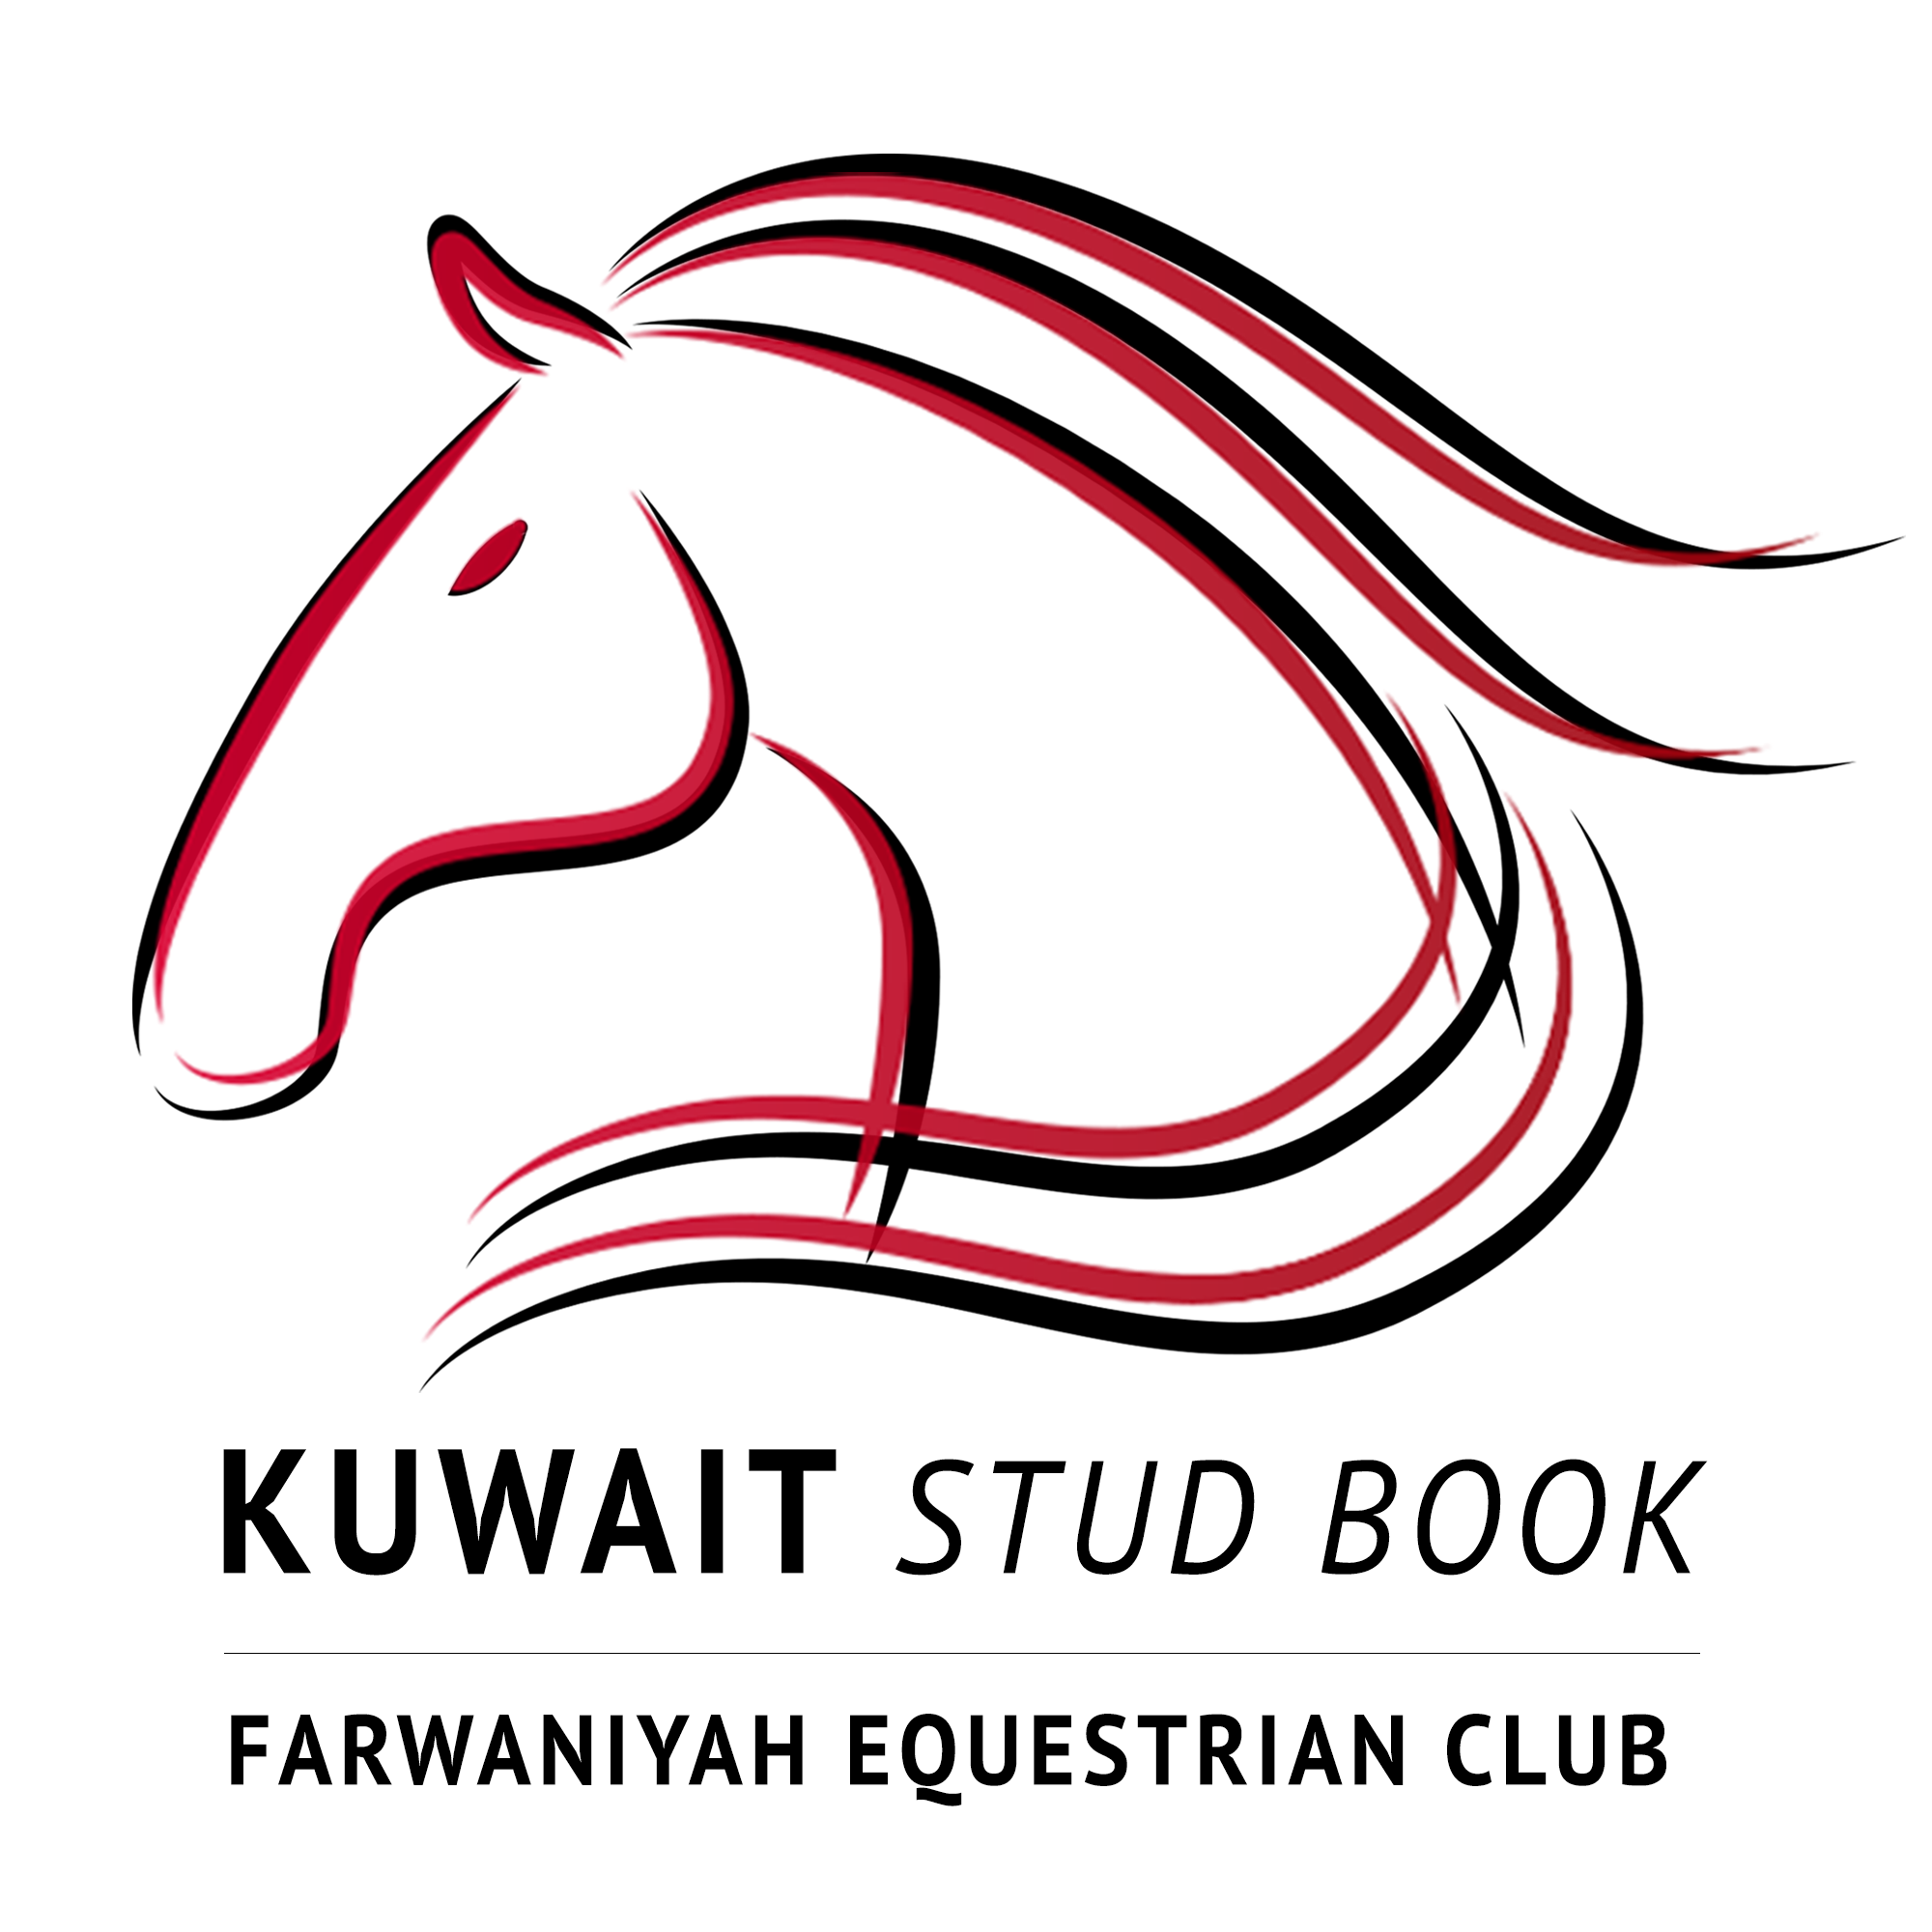 Stud Book Authority of Kuwait